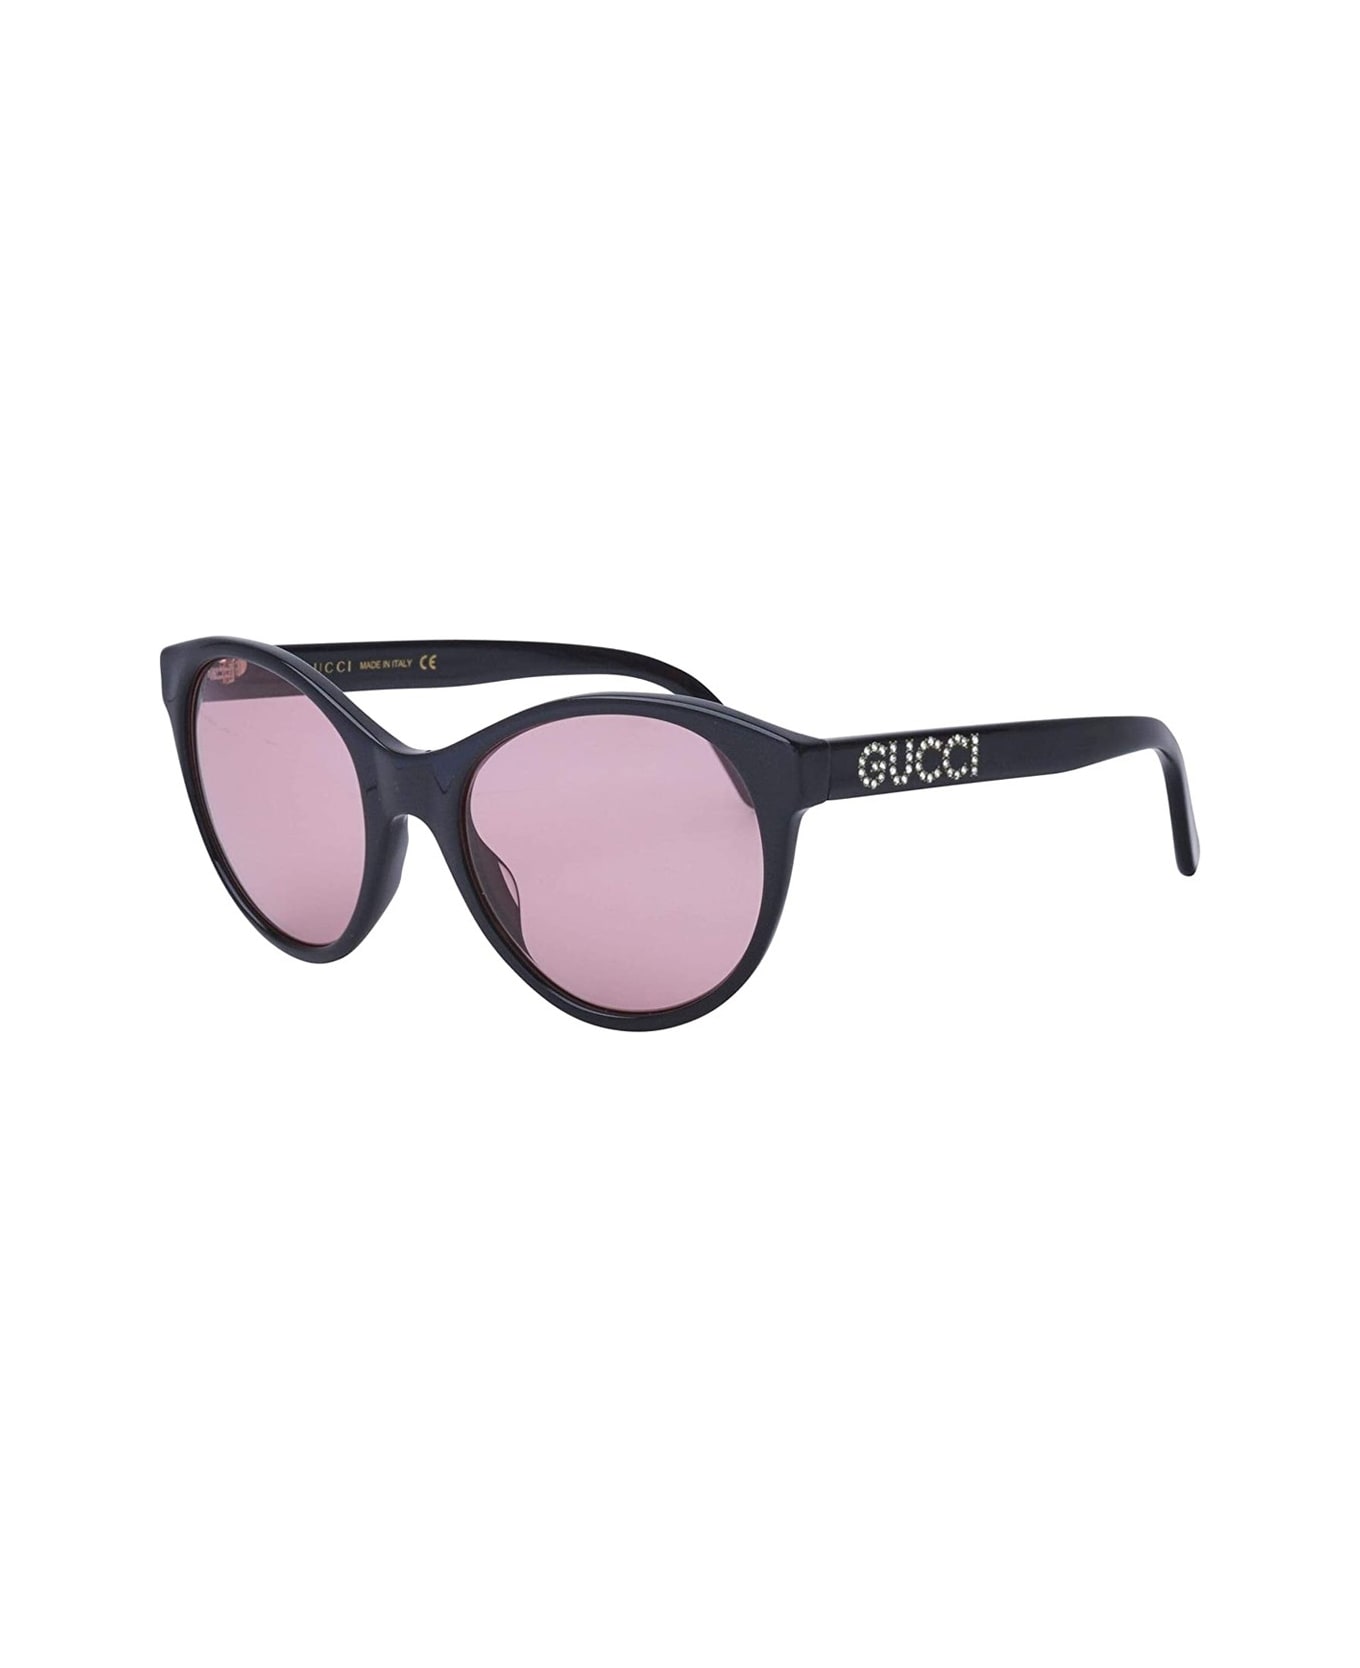 Gucci Eyewear Gg0419s Sunglasses - Nero